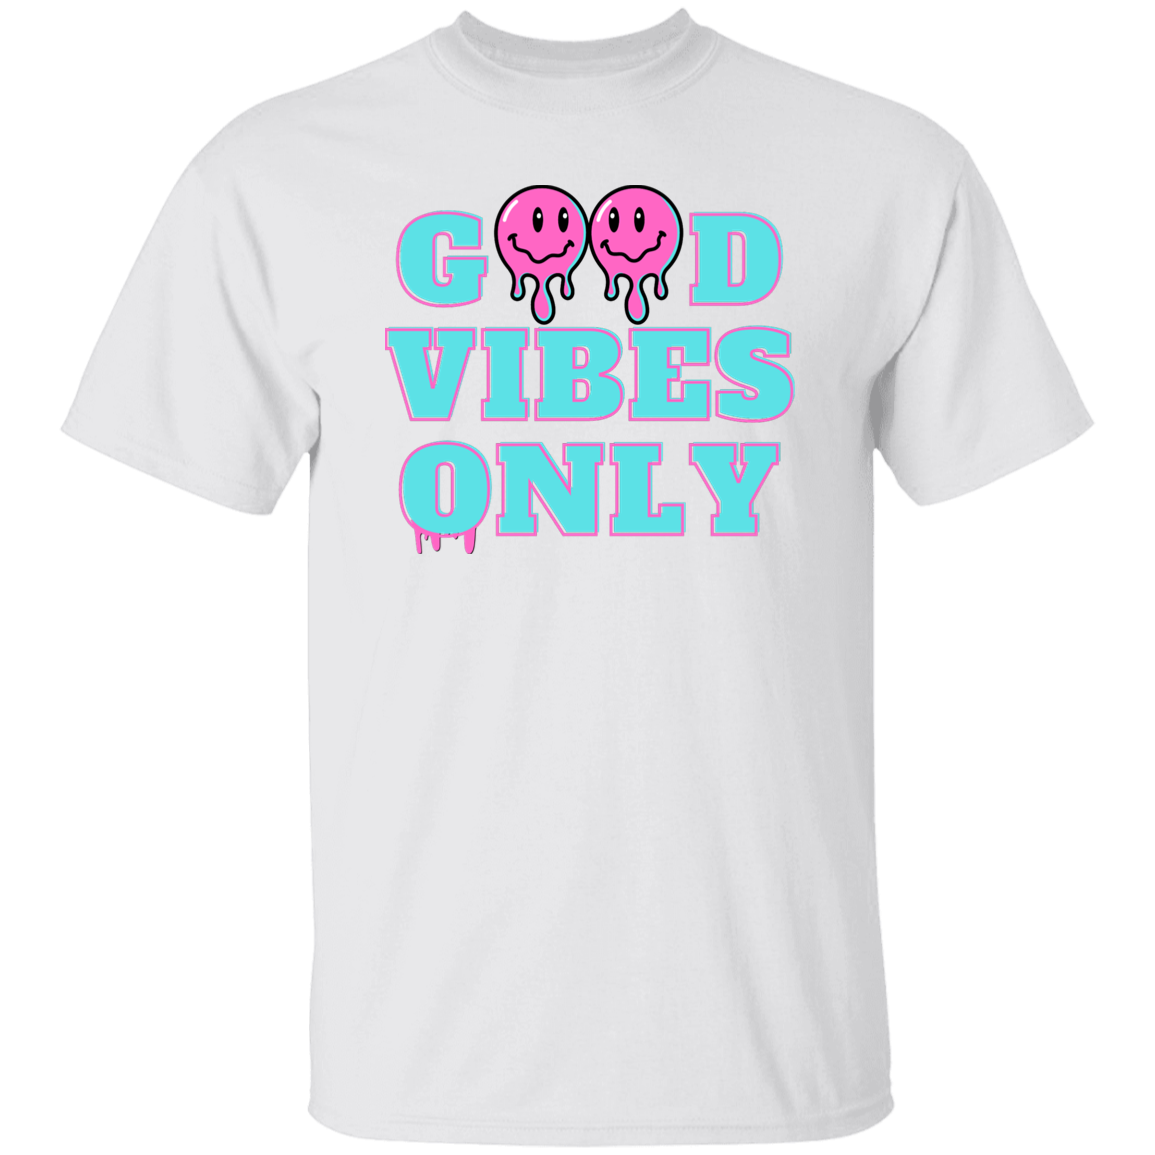 Good Vibes Only - Men's T-Shirt